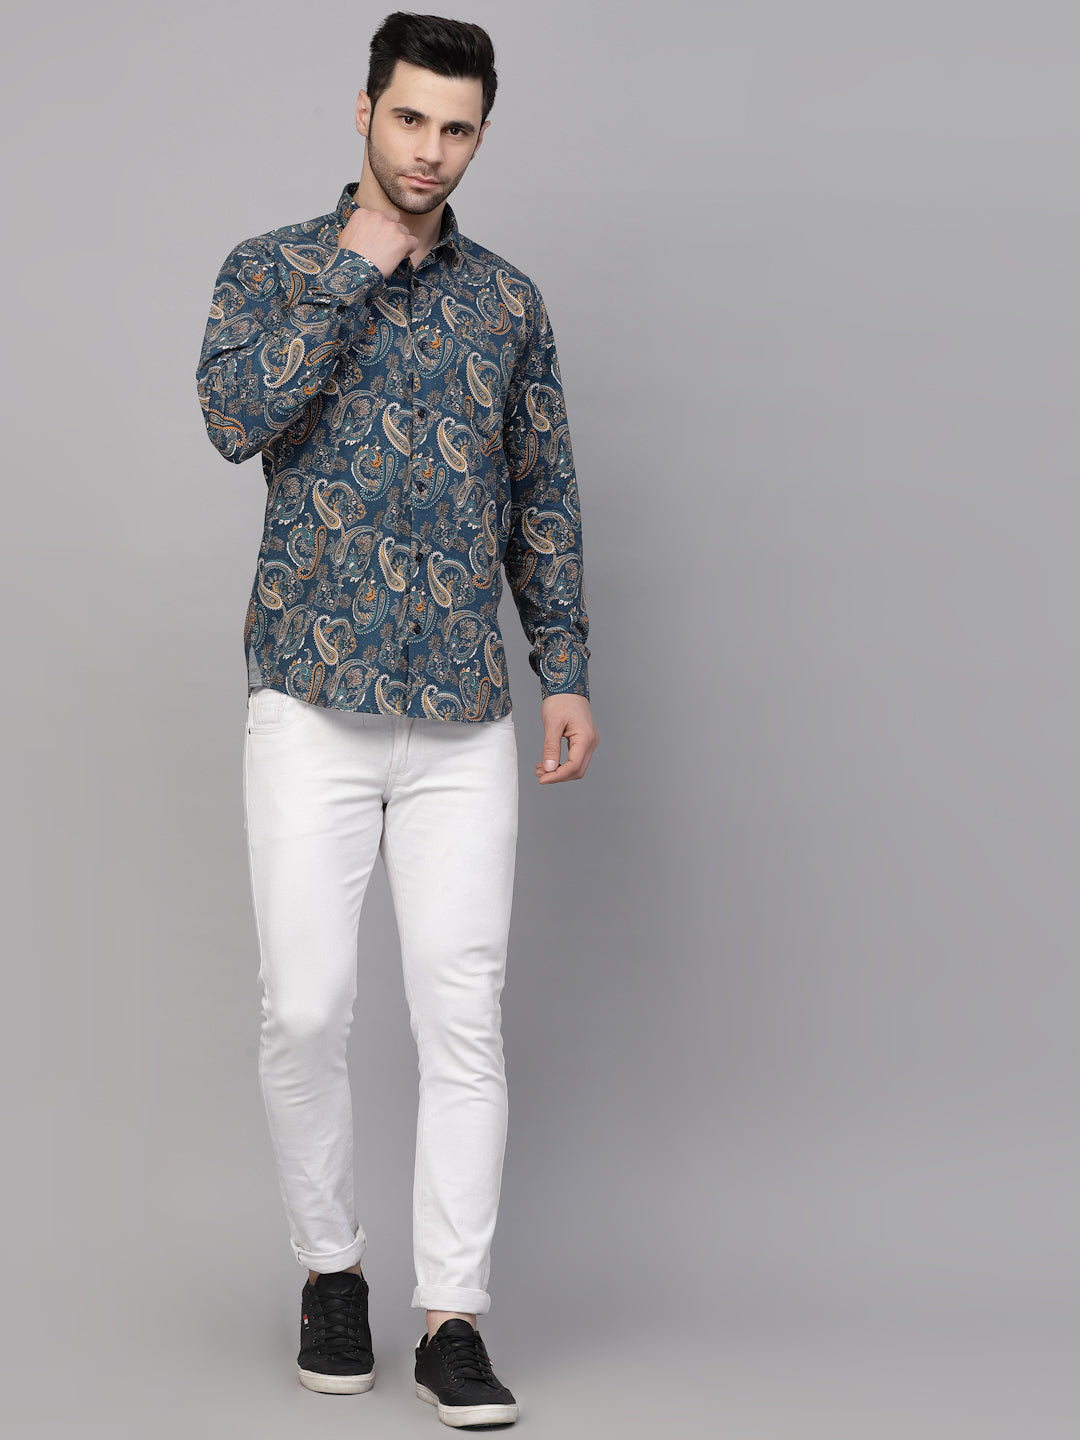 Valbone Men’s Blue Digital Print Paisley Design Regular Fit Casual Shirt Full Sleeves